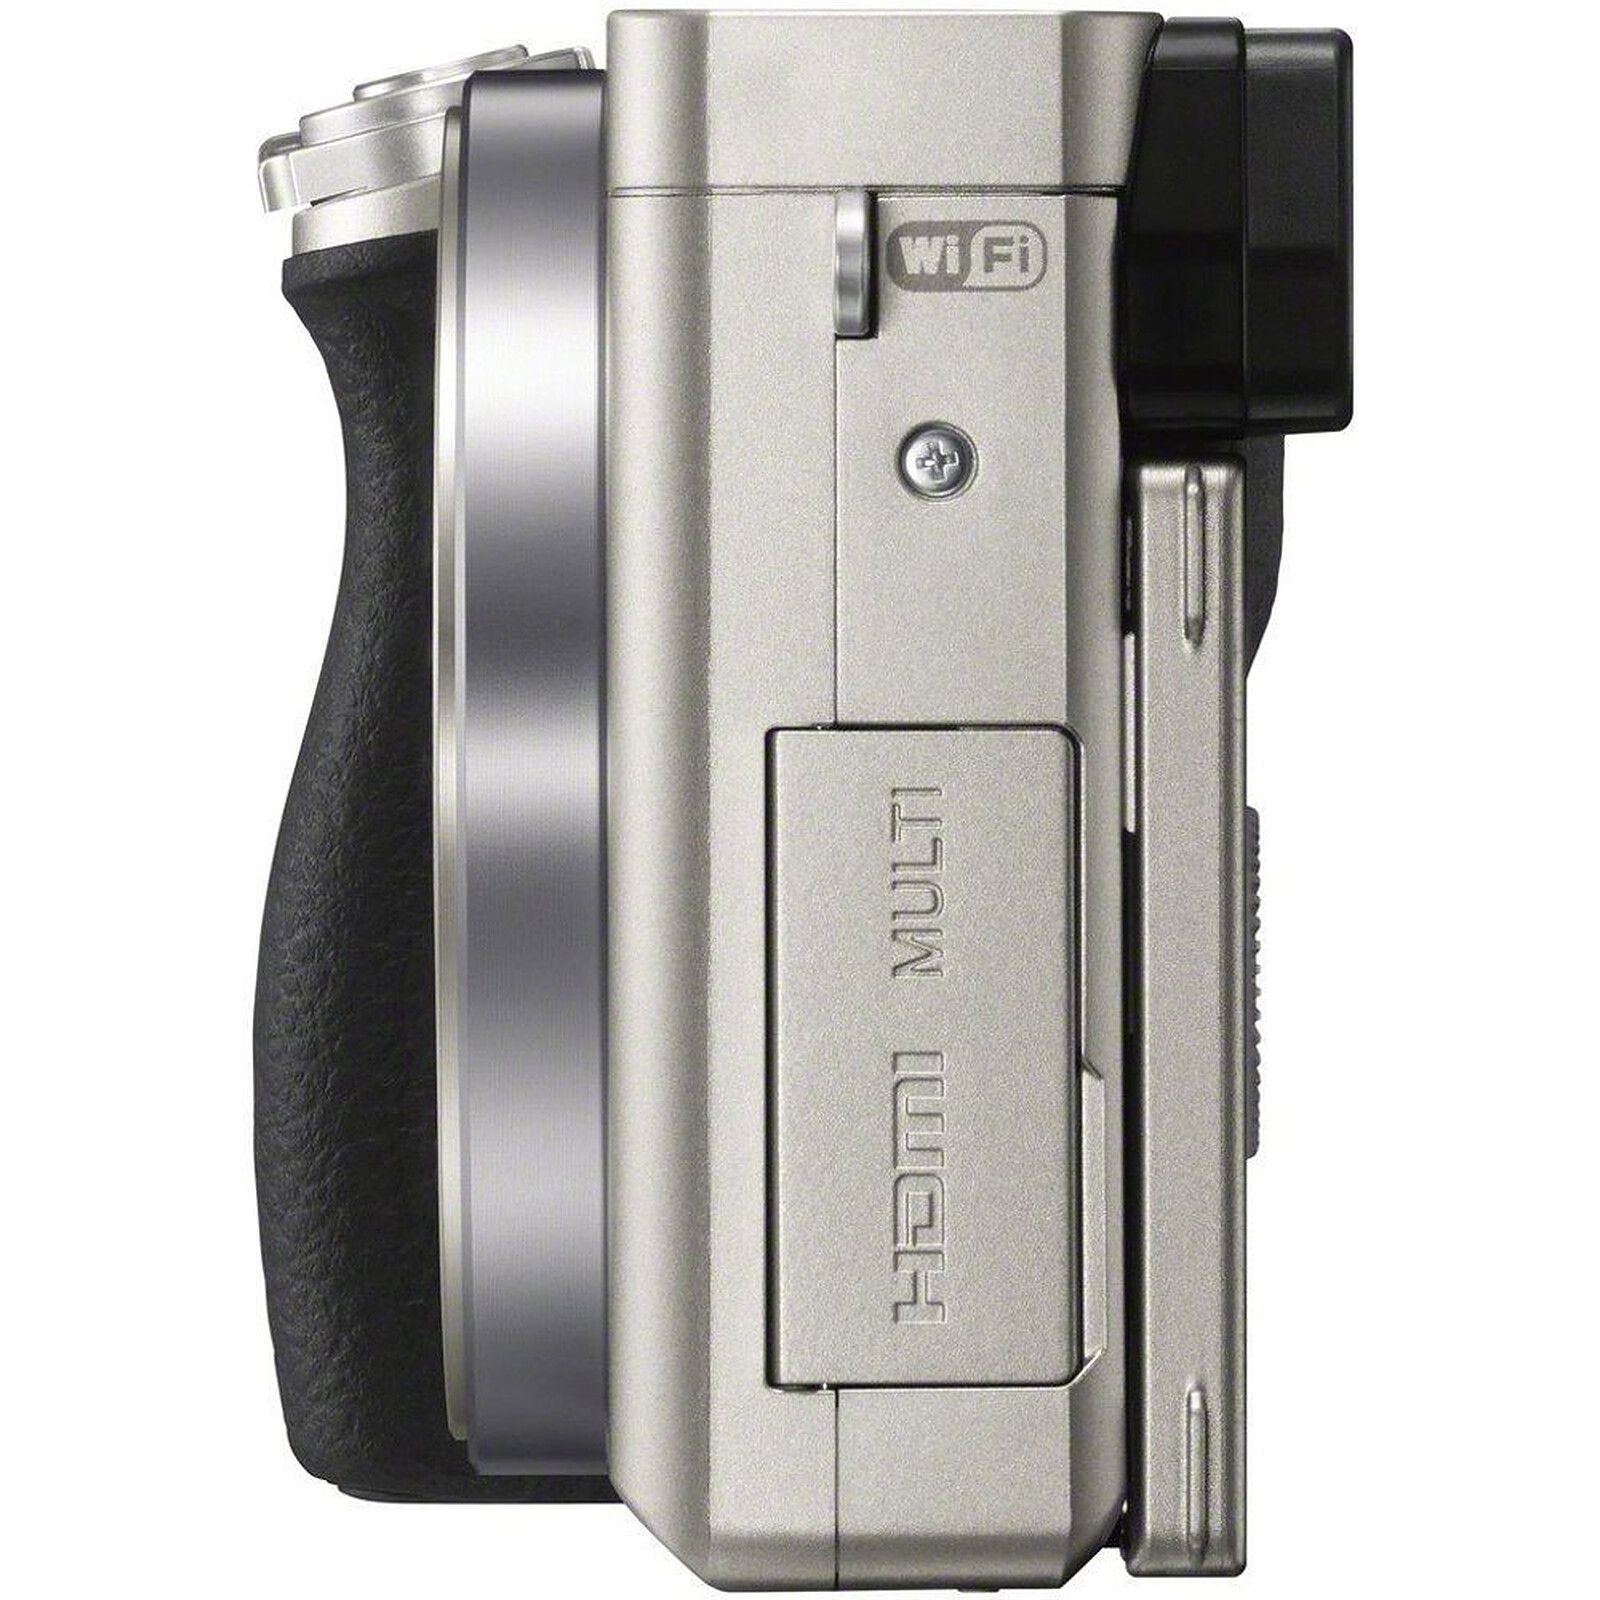 Sony Alpha 6300 + Objectif 18-105 mm F4 G OSS - Appareil photo hybride -  Garantie 3 ans LDLC